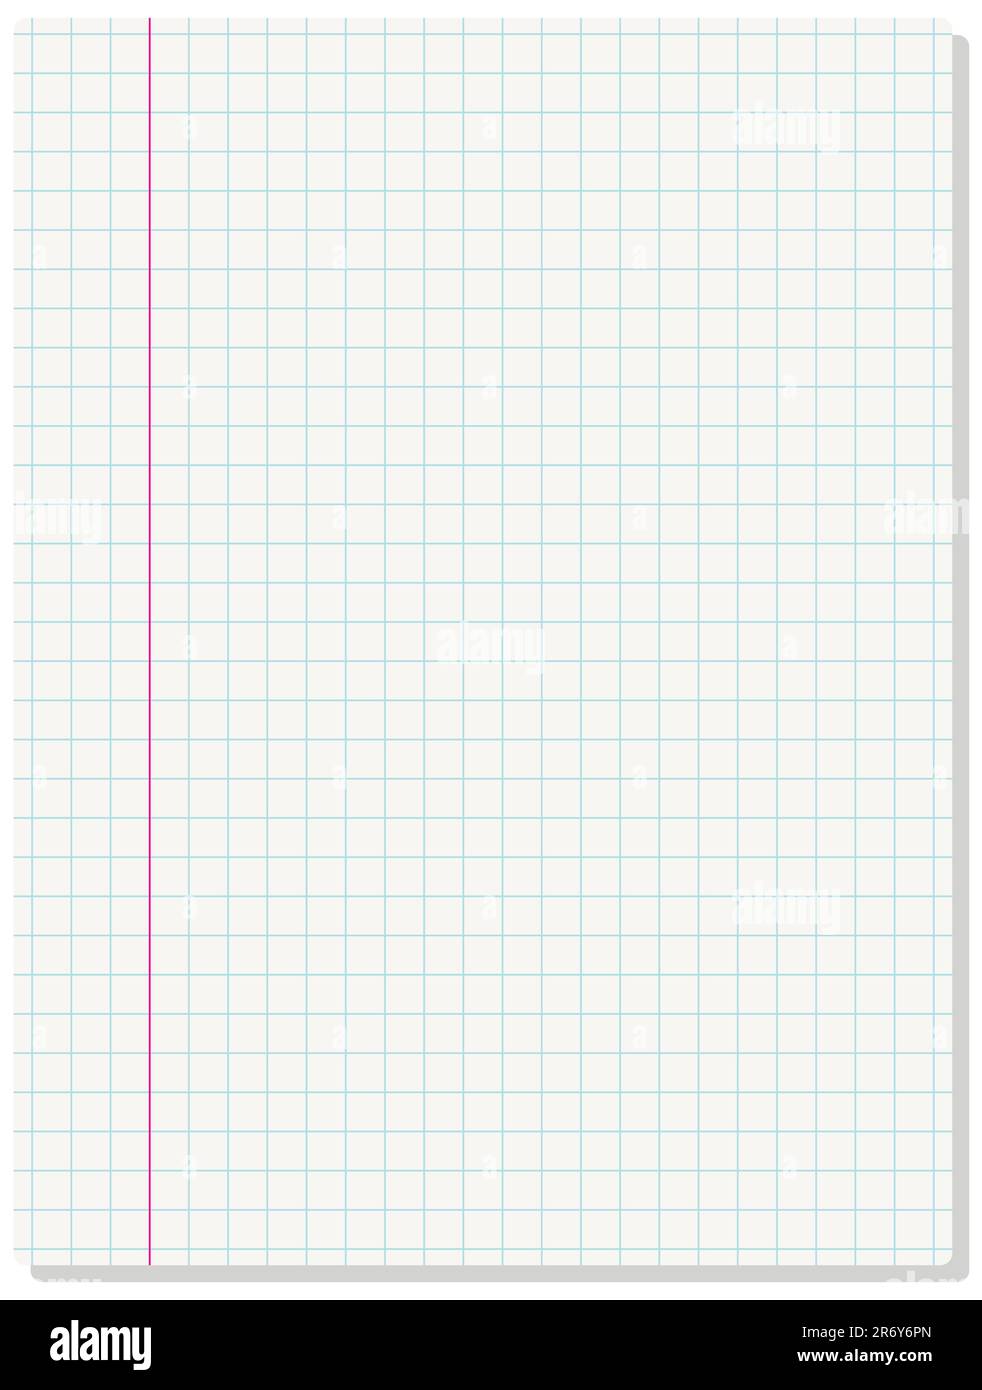 Background of blank paper sheet. Vector illustration. Stock Vector